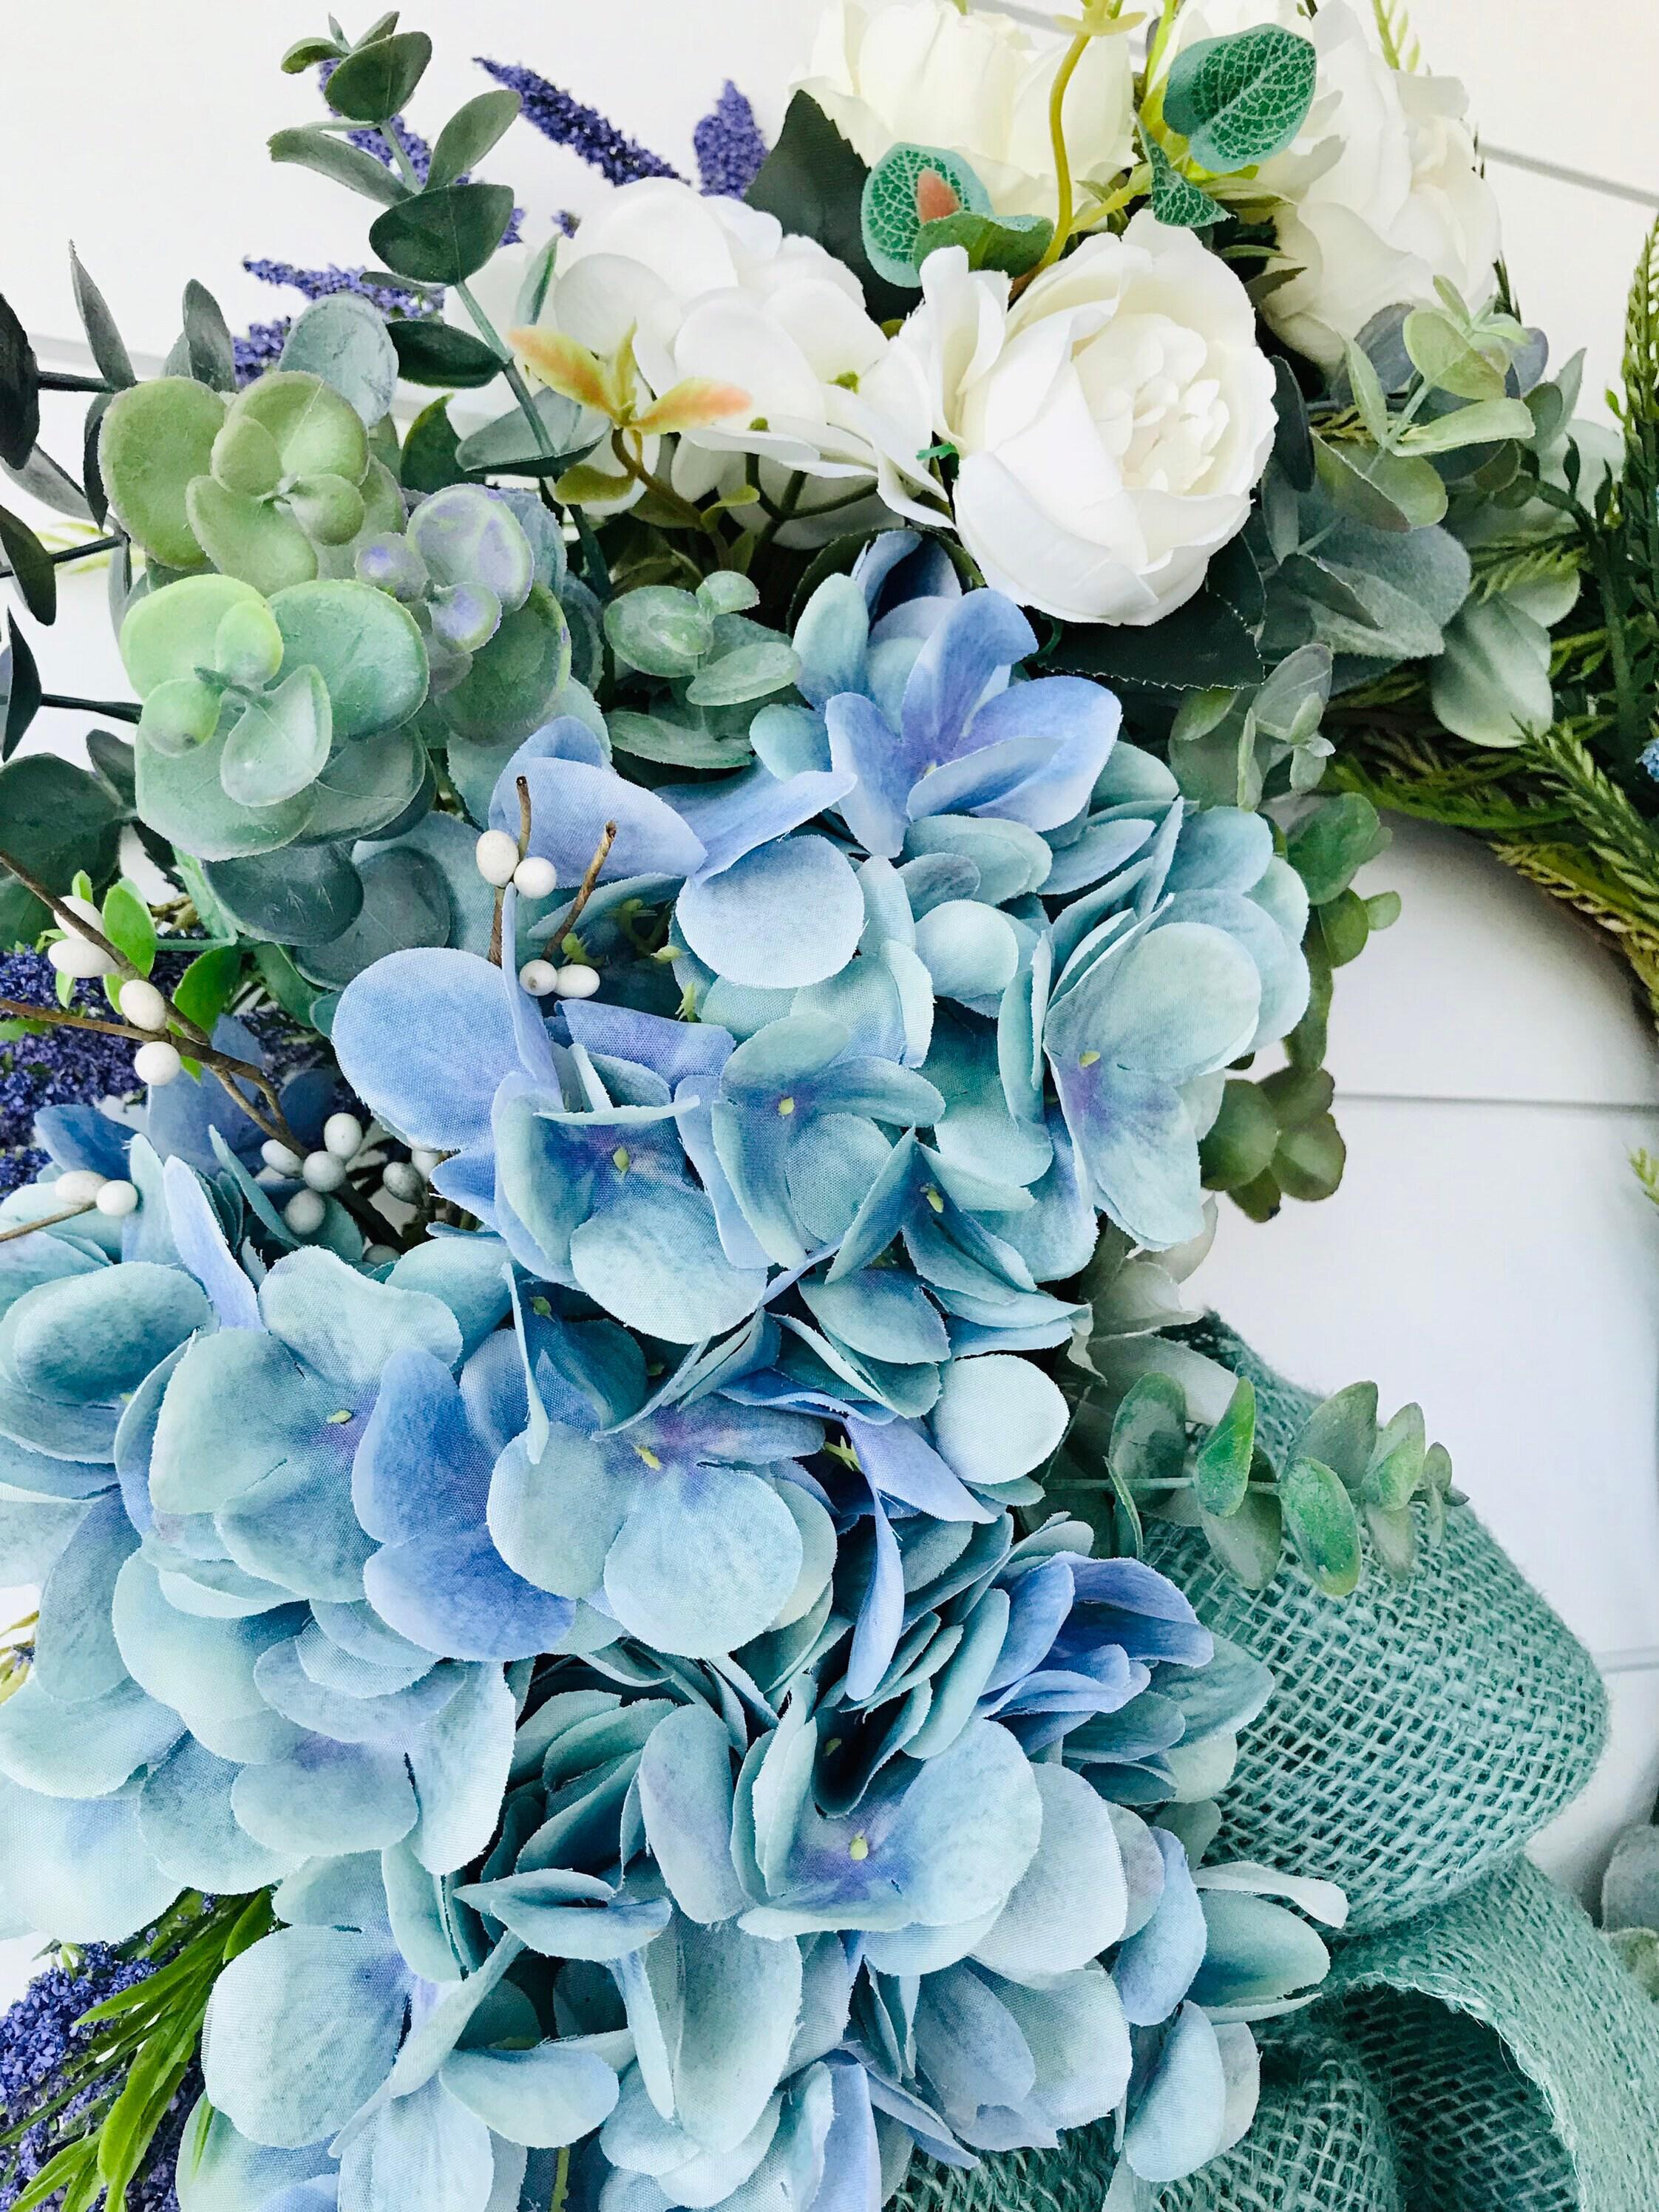 White Hydrangea Wedding Wreath